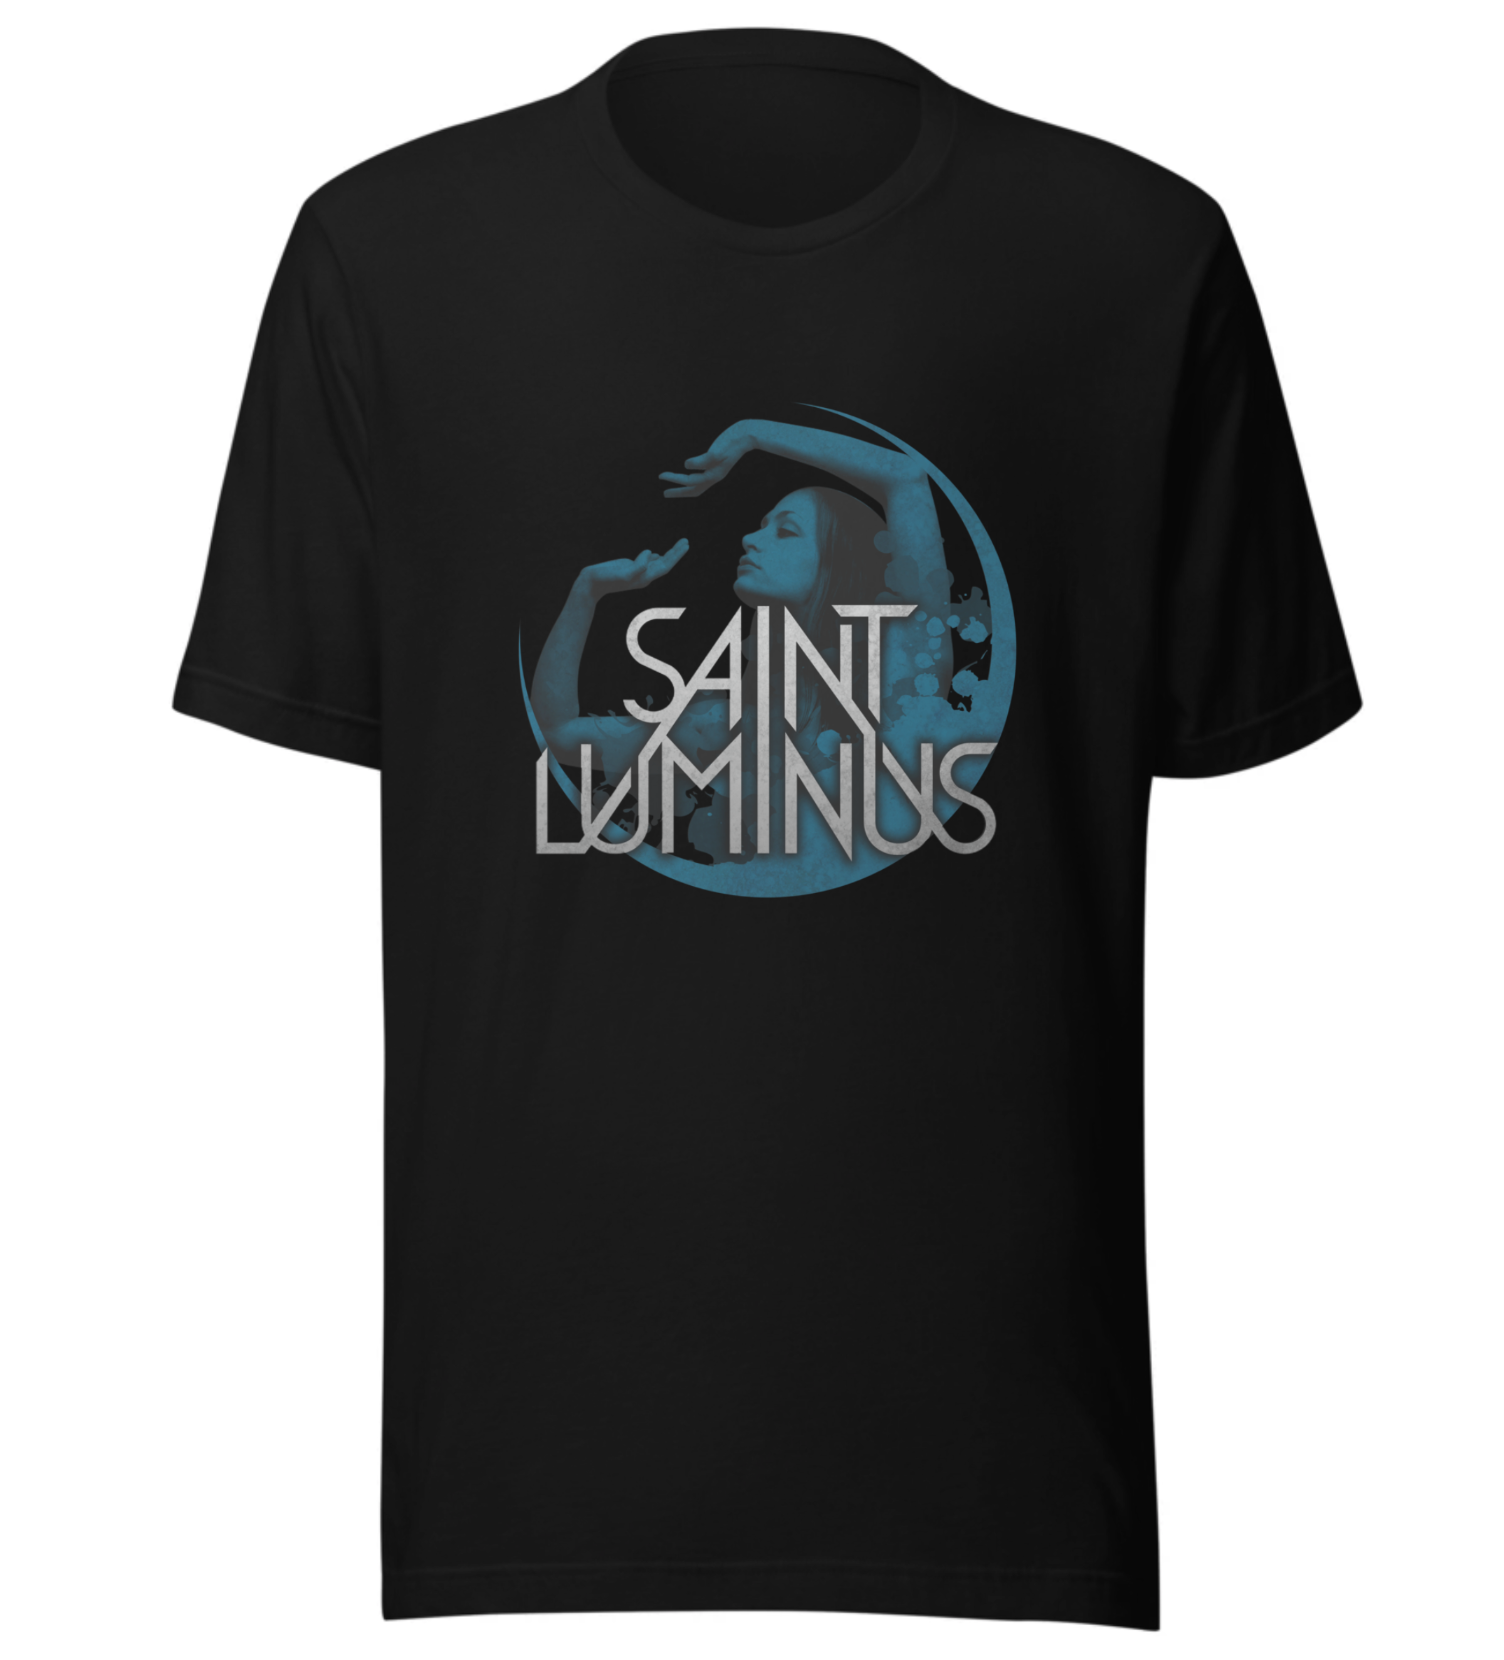 The Original Saint Luminus Shirt - Unisex